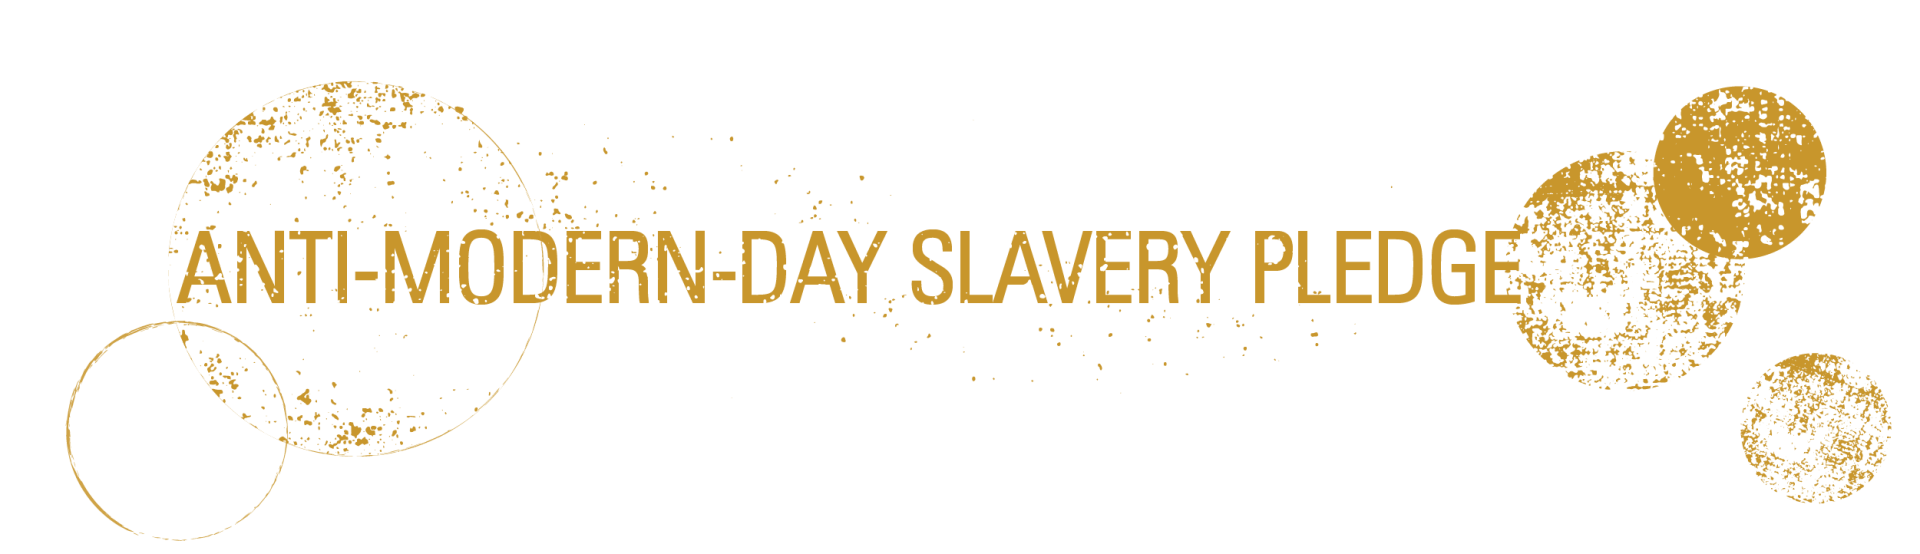 Modern-day slavery pledge